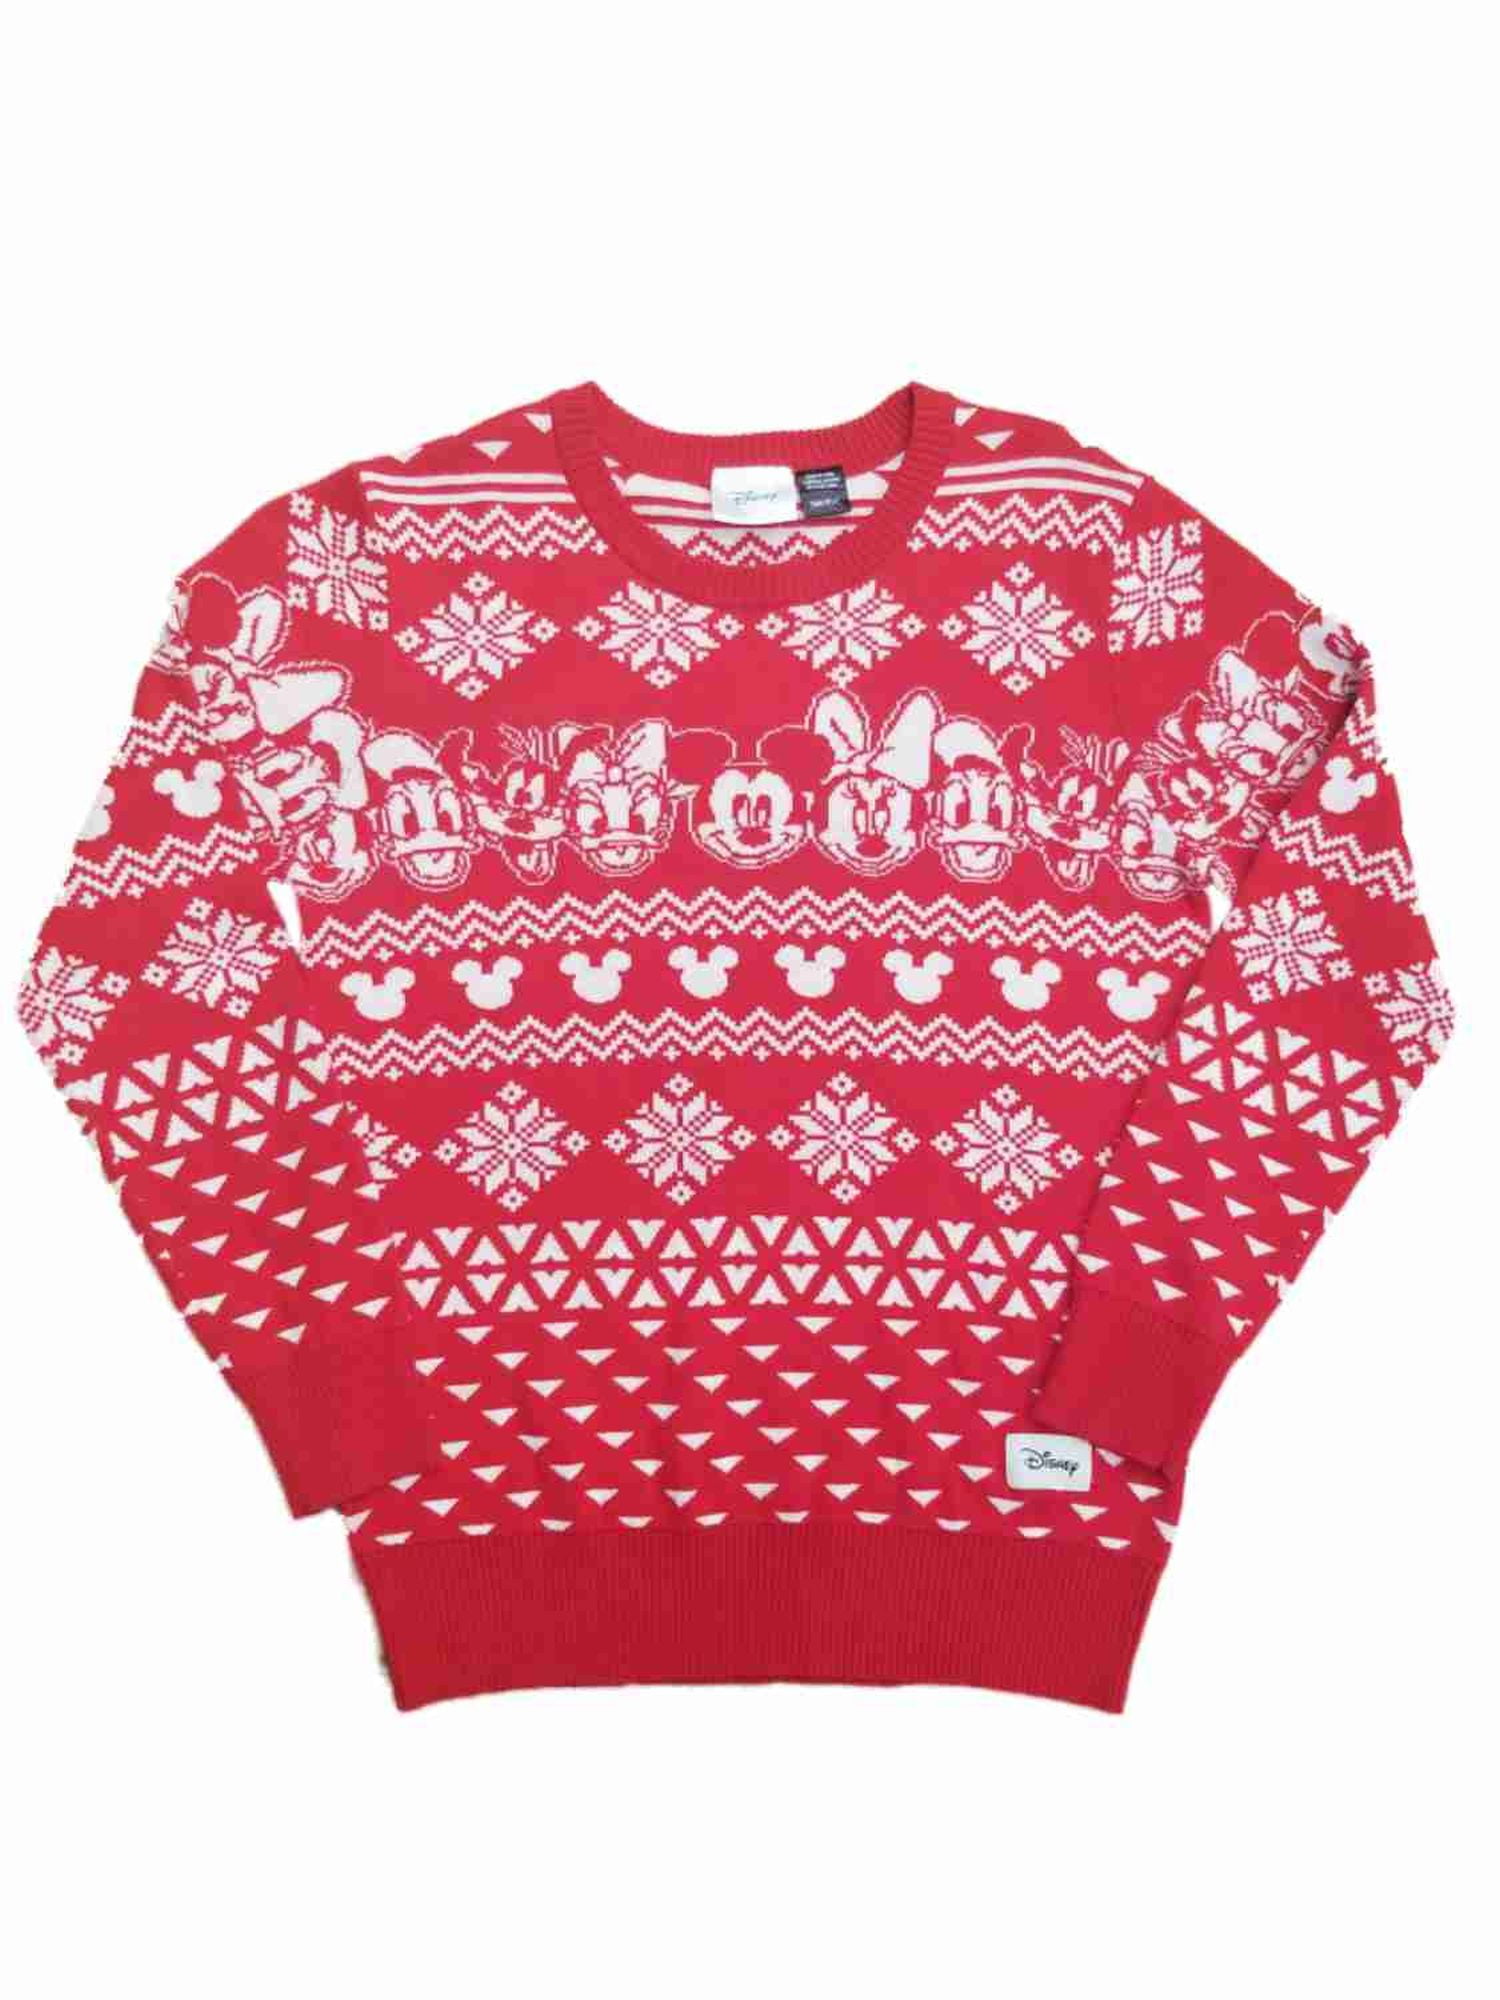 Disney Womens Red & White Character Long Sleeve Lightweight Knit Sweater L  - Walmart.com